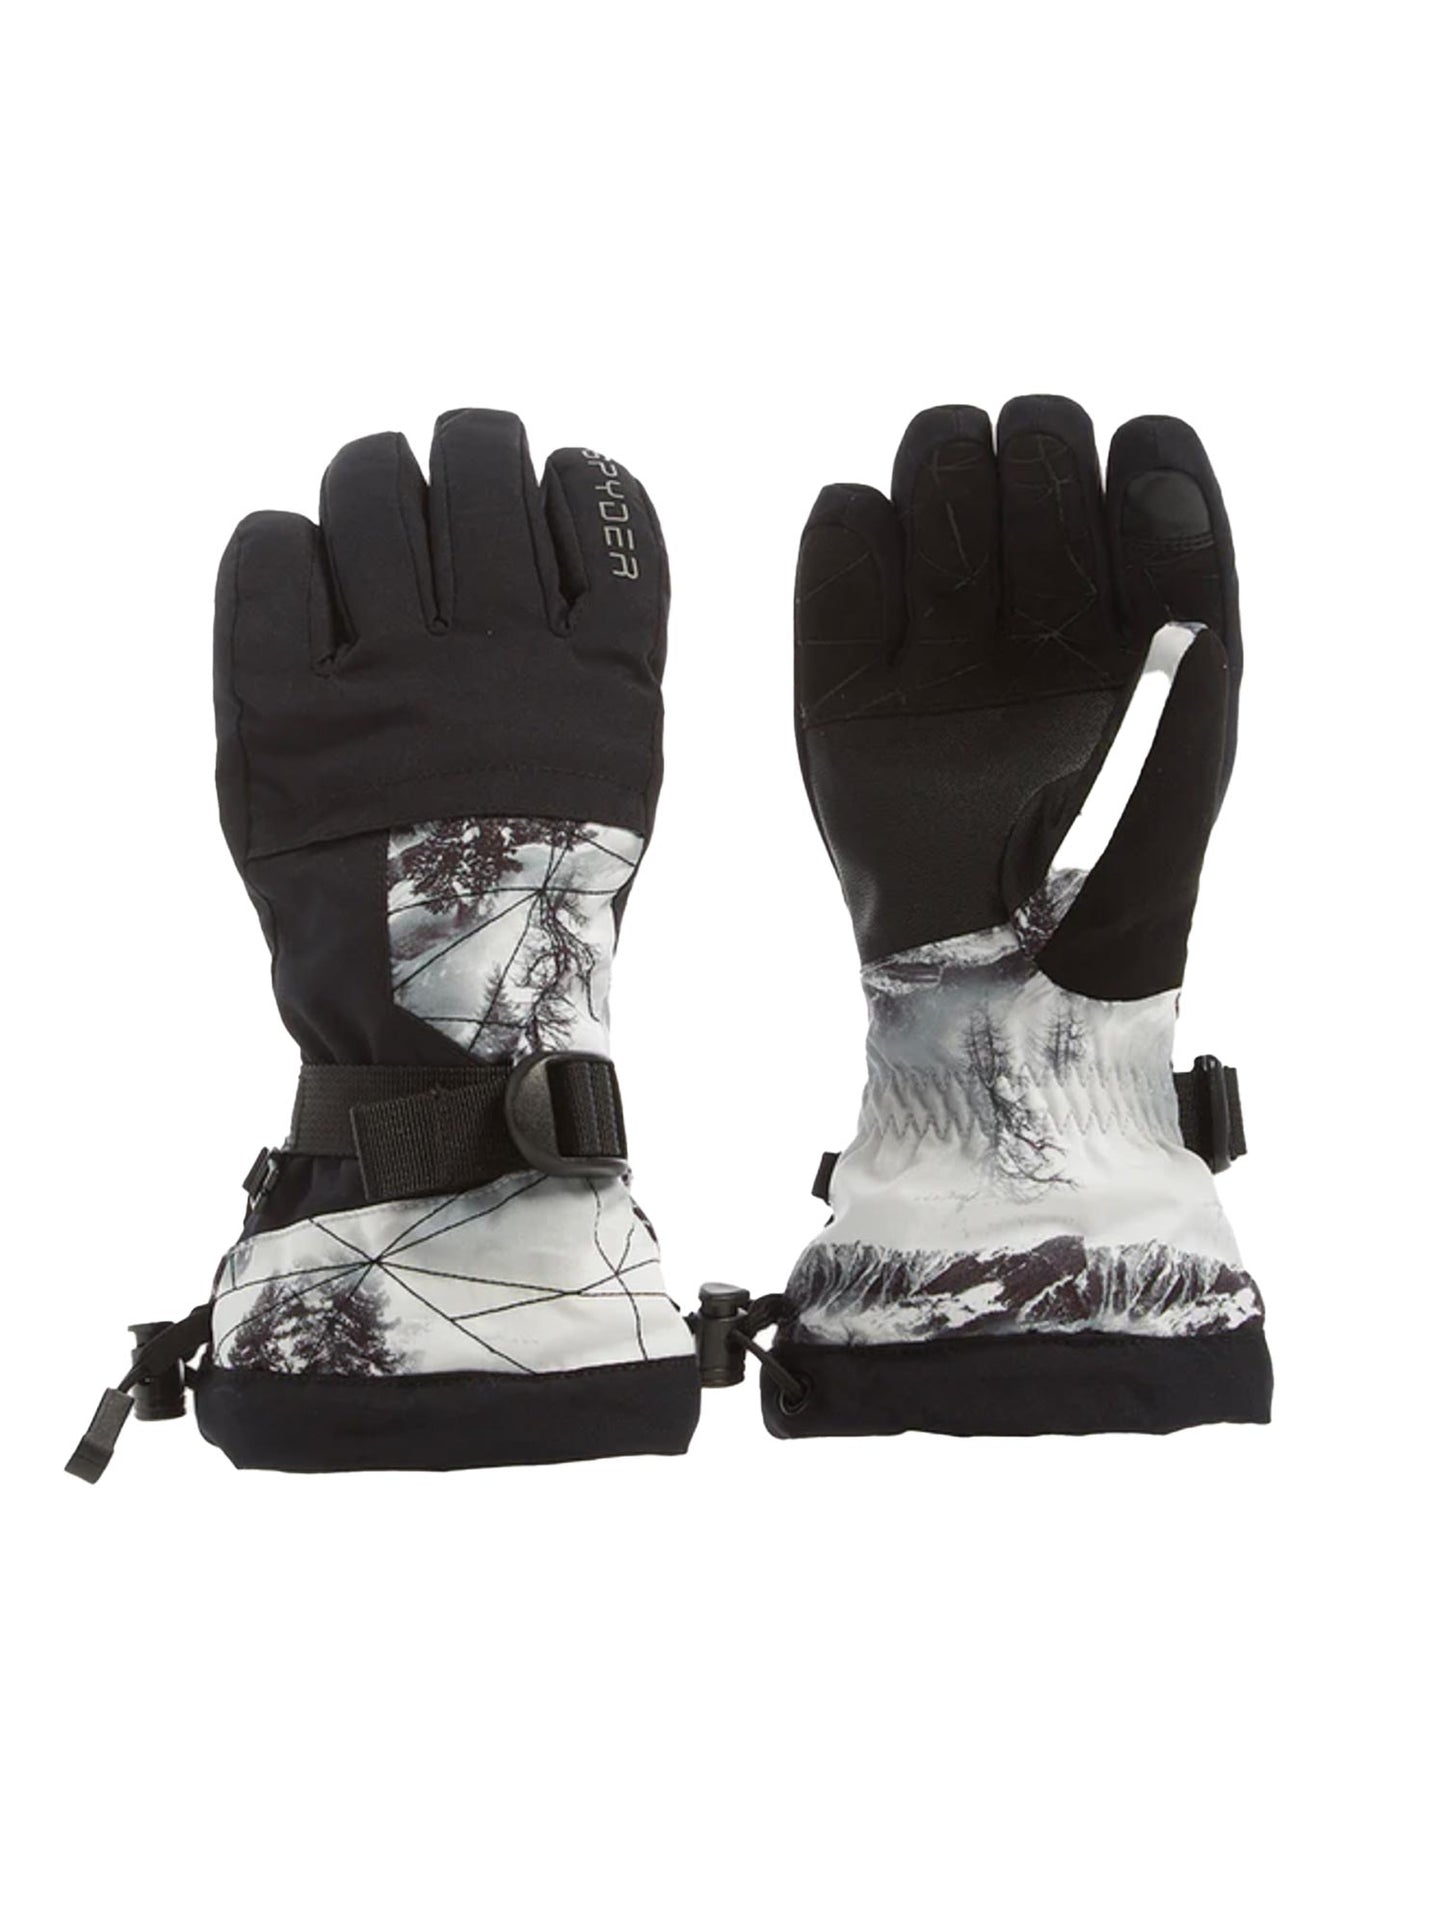 Spyder skis gloves for boys, black with tree scene